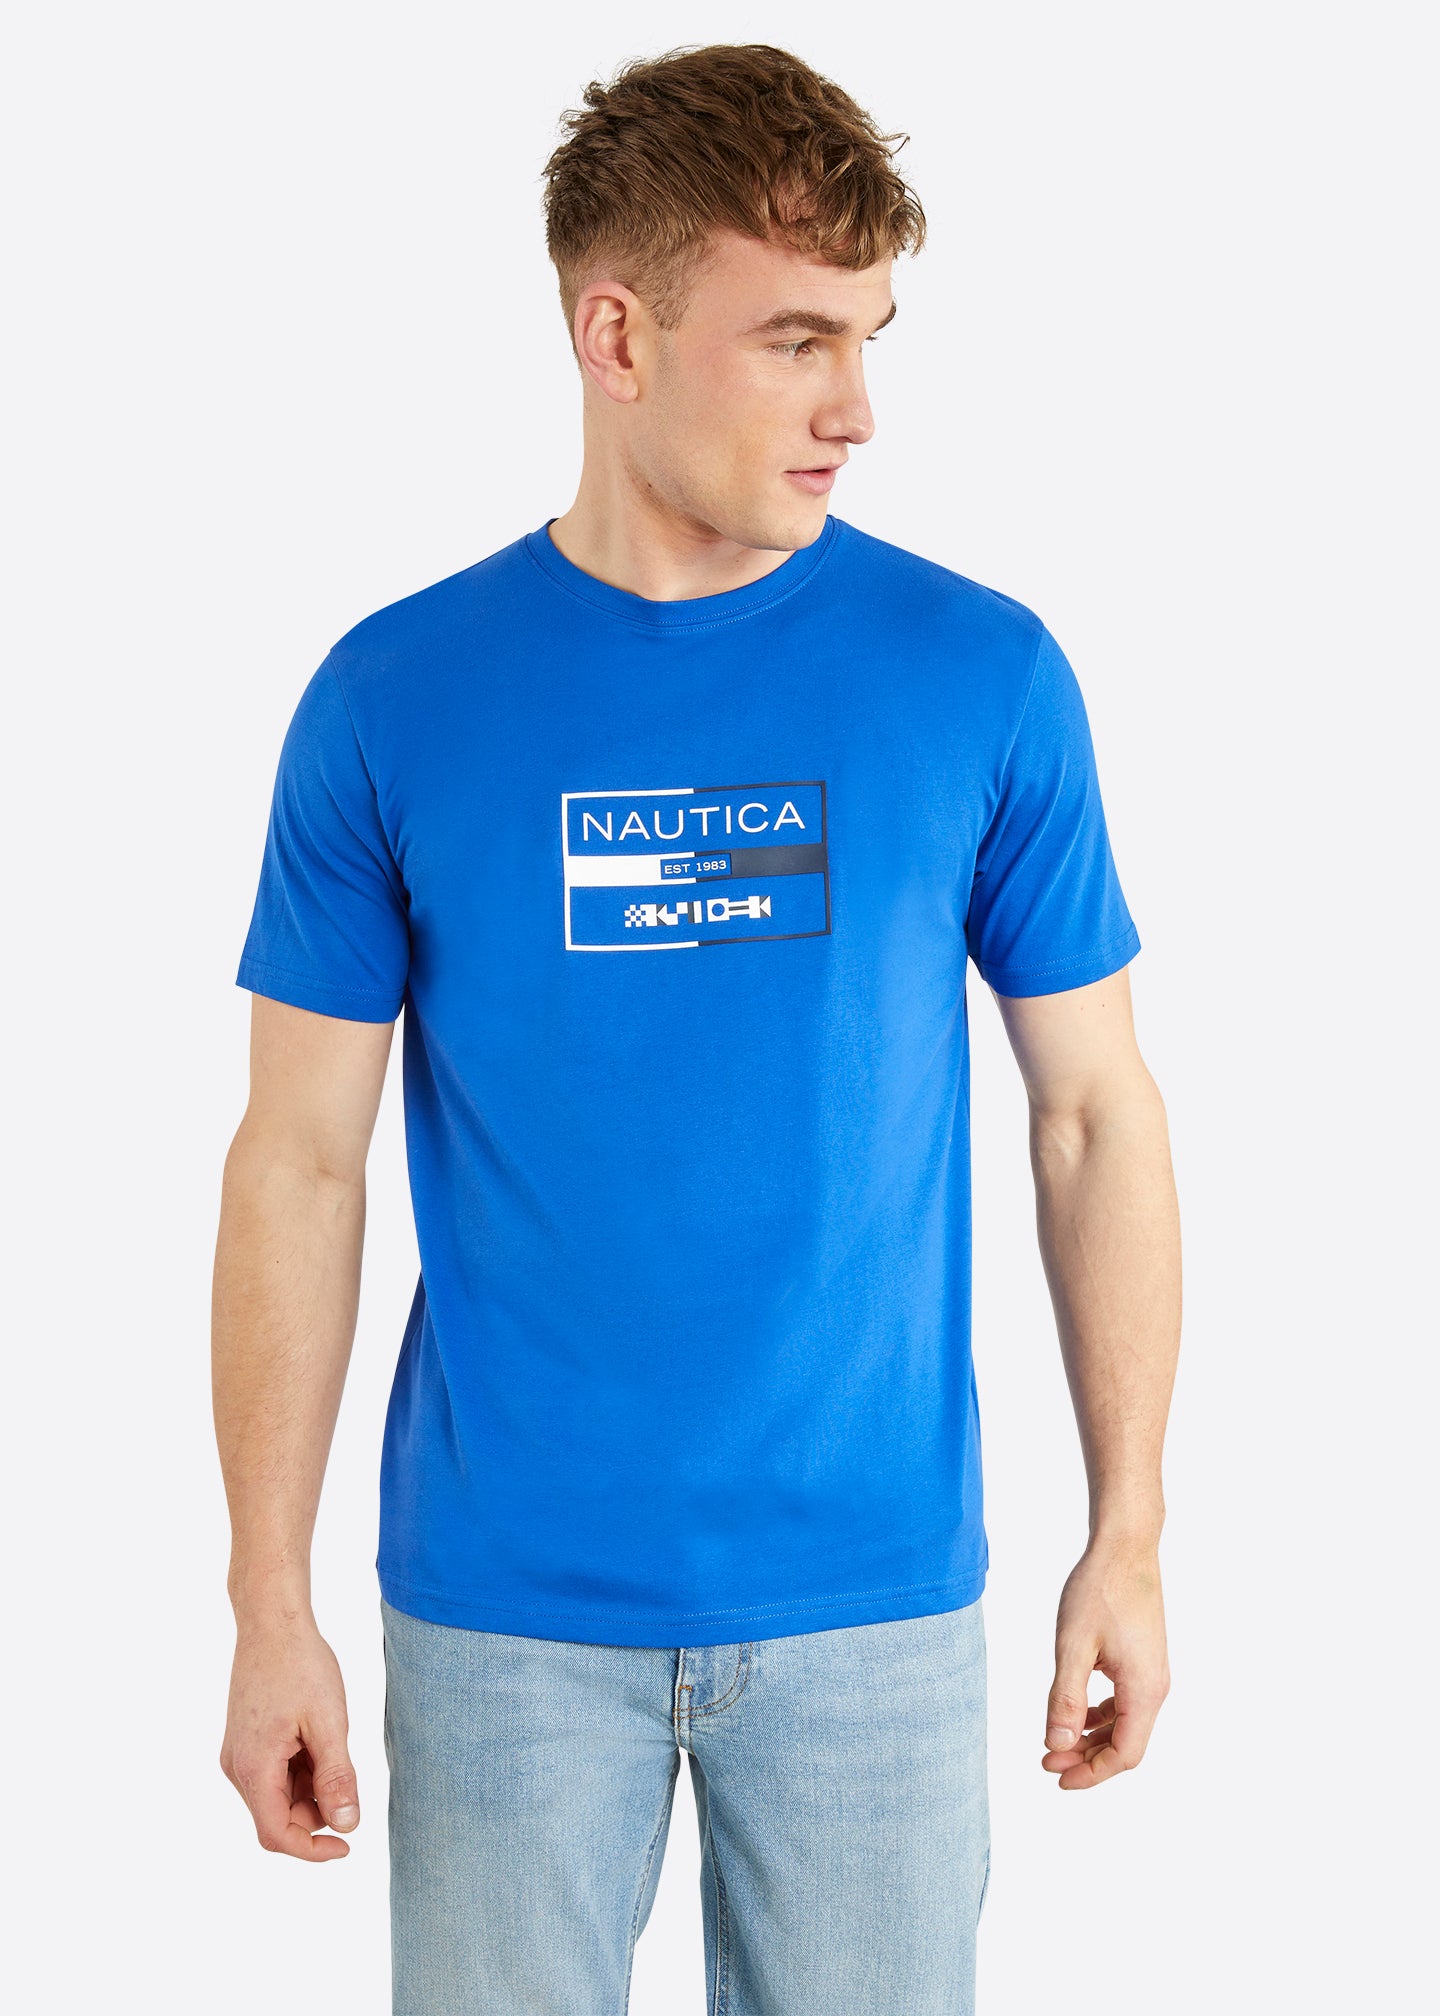 Nautica Alves T-Shirt - Cobalt - Front